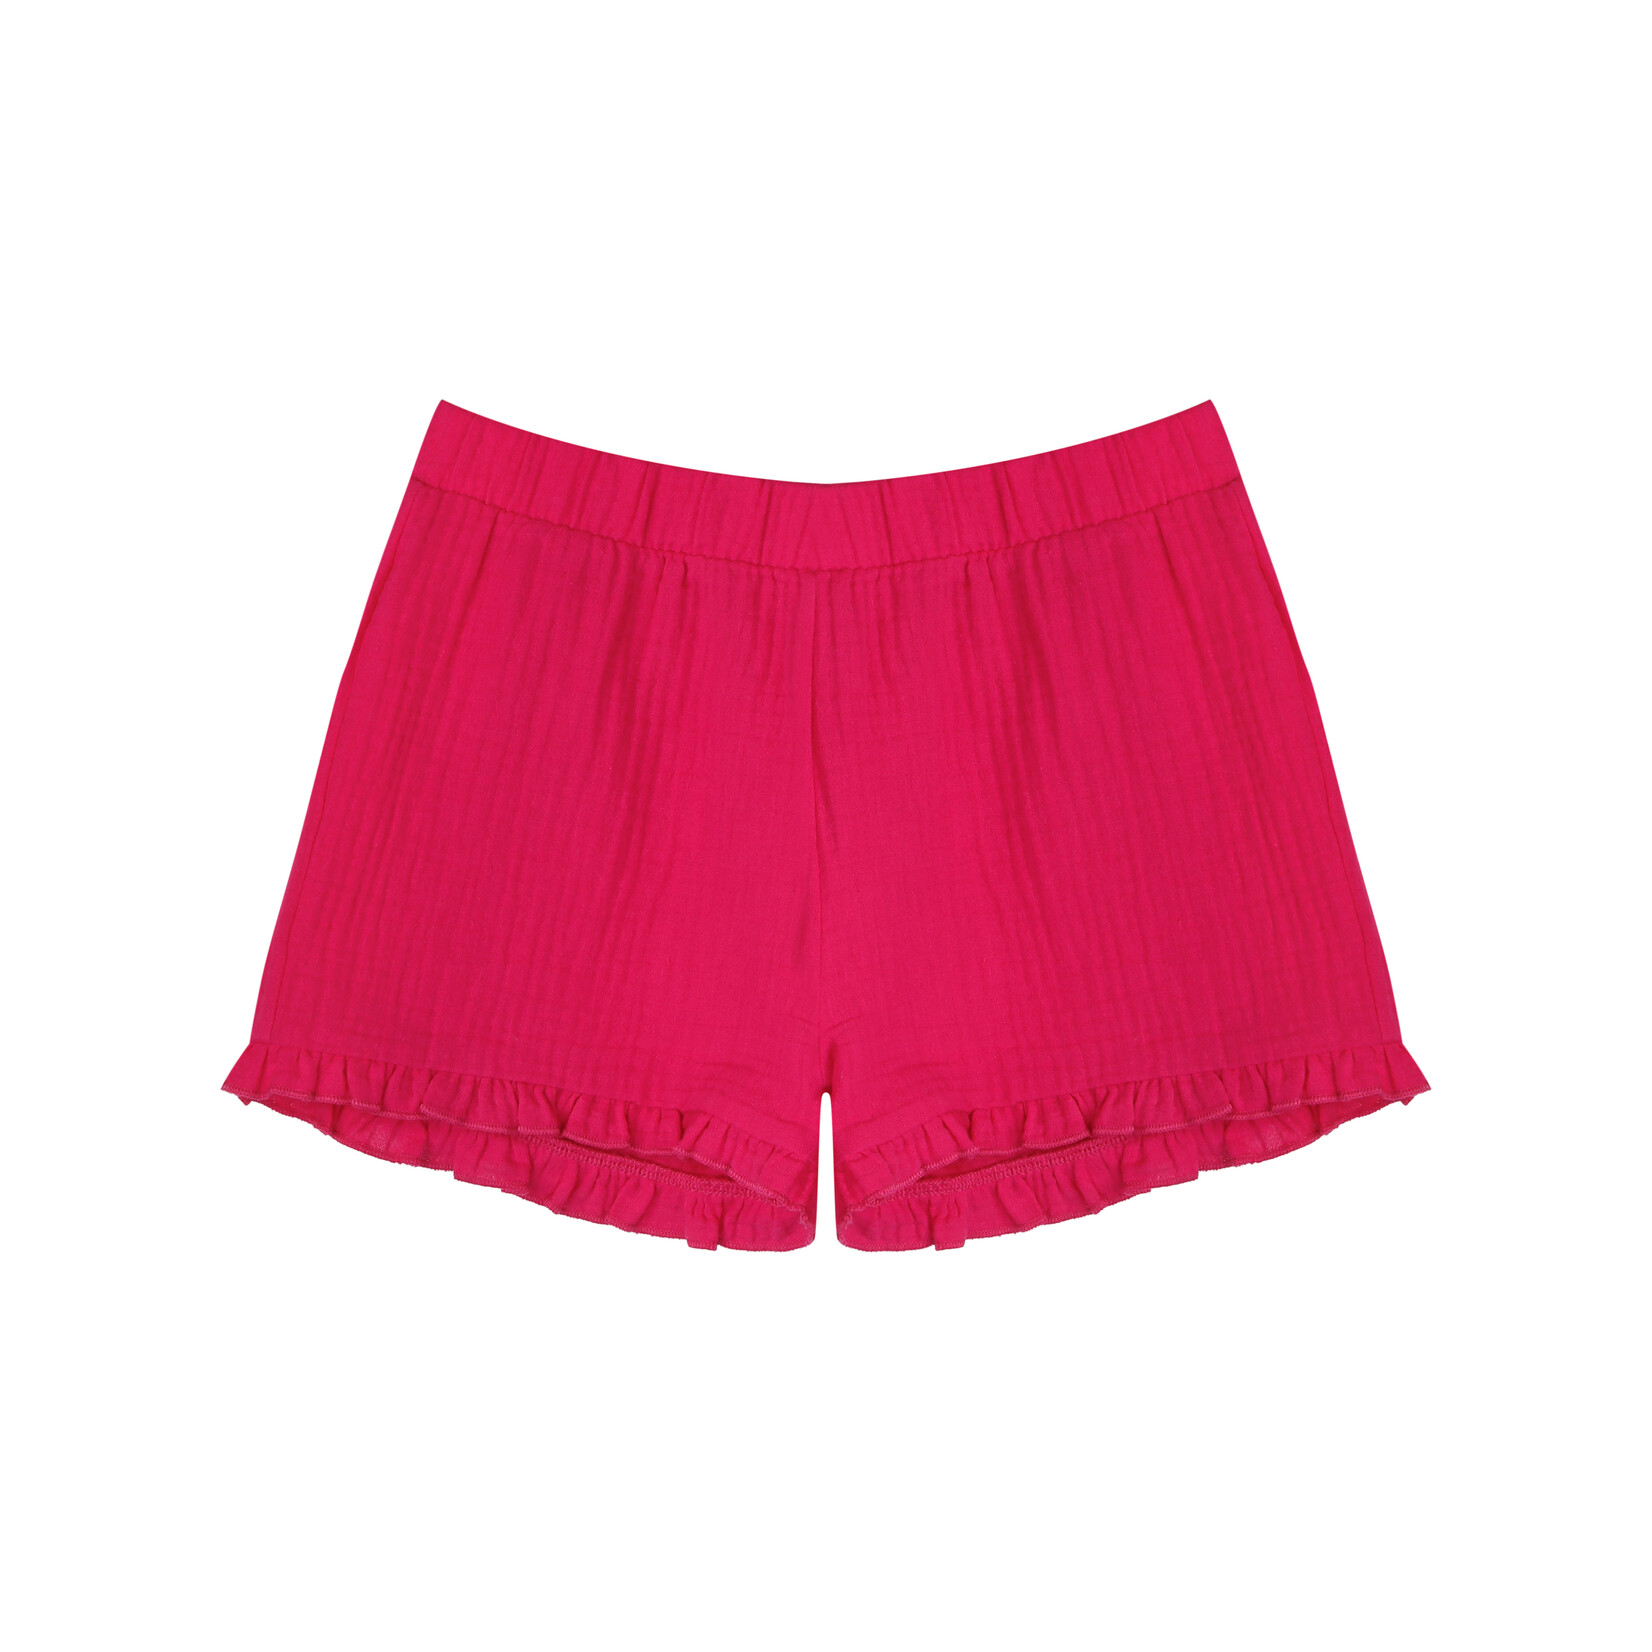 Jacky Sue Jacky Sue - Leah pants - Hot Pink